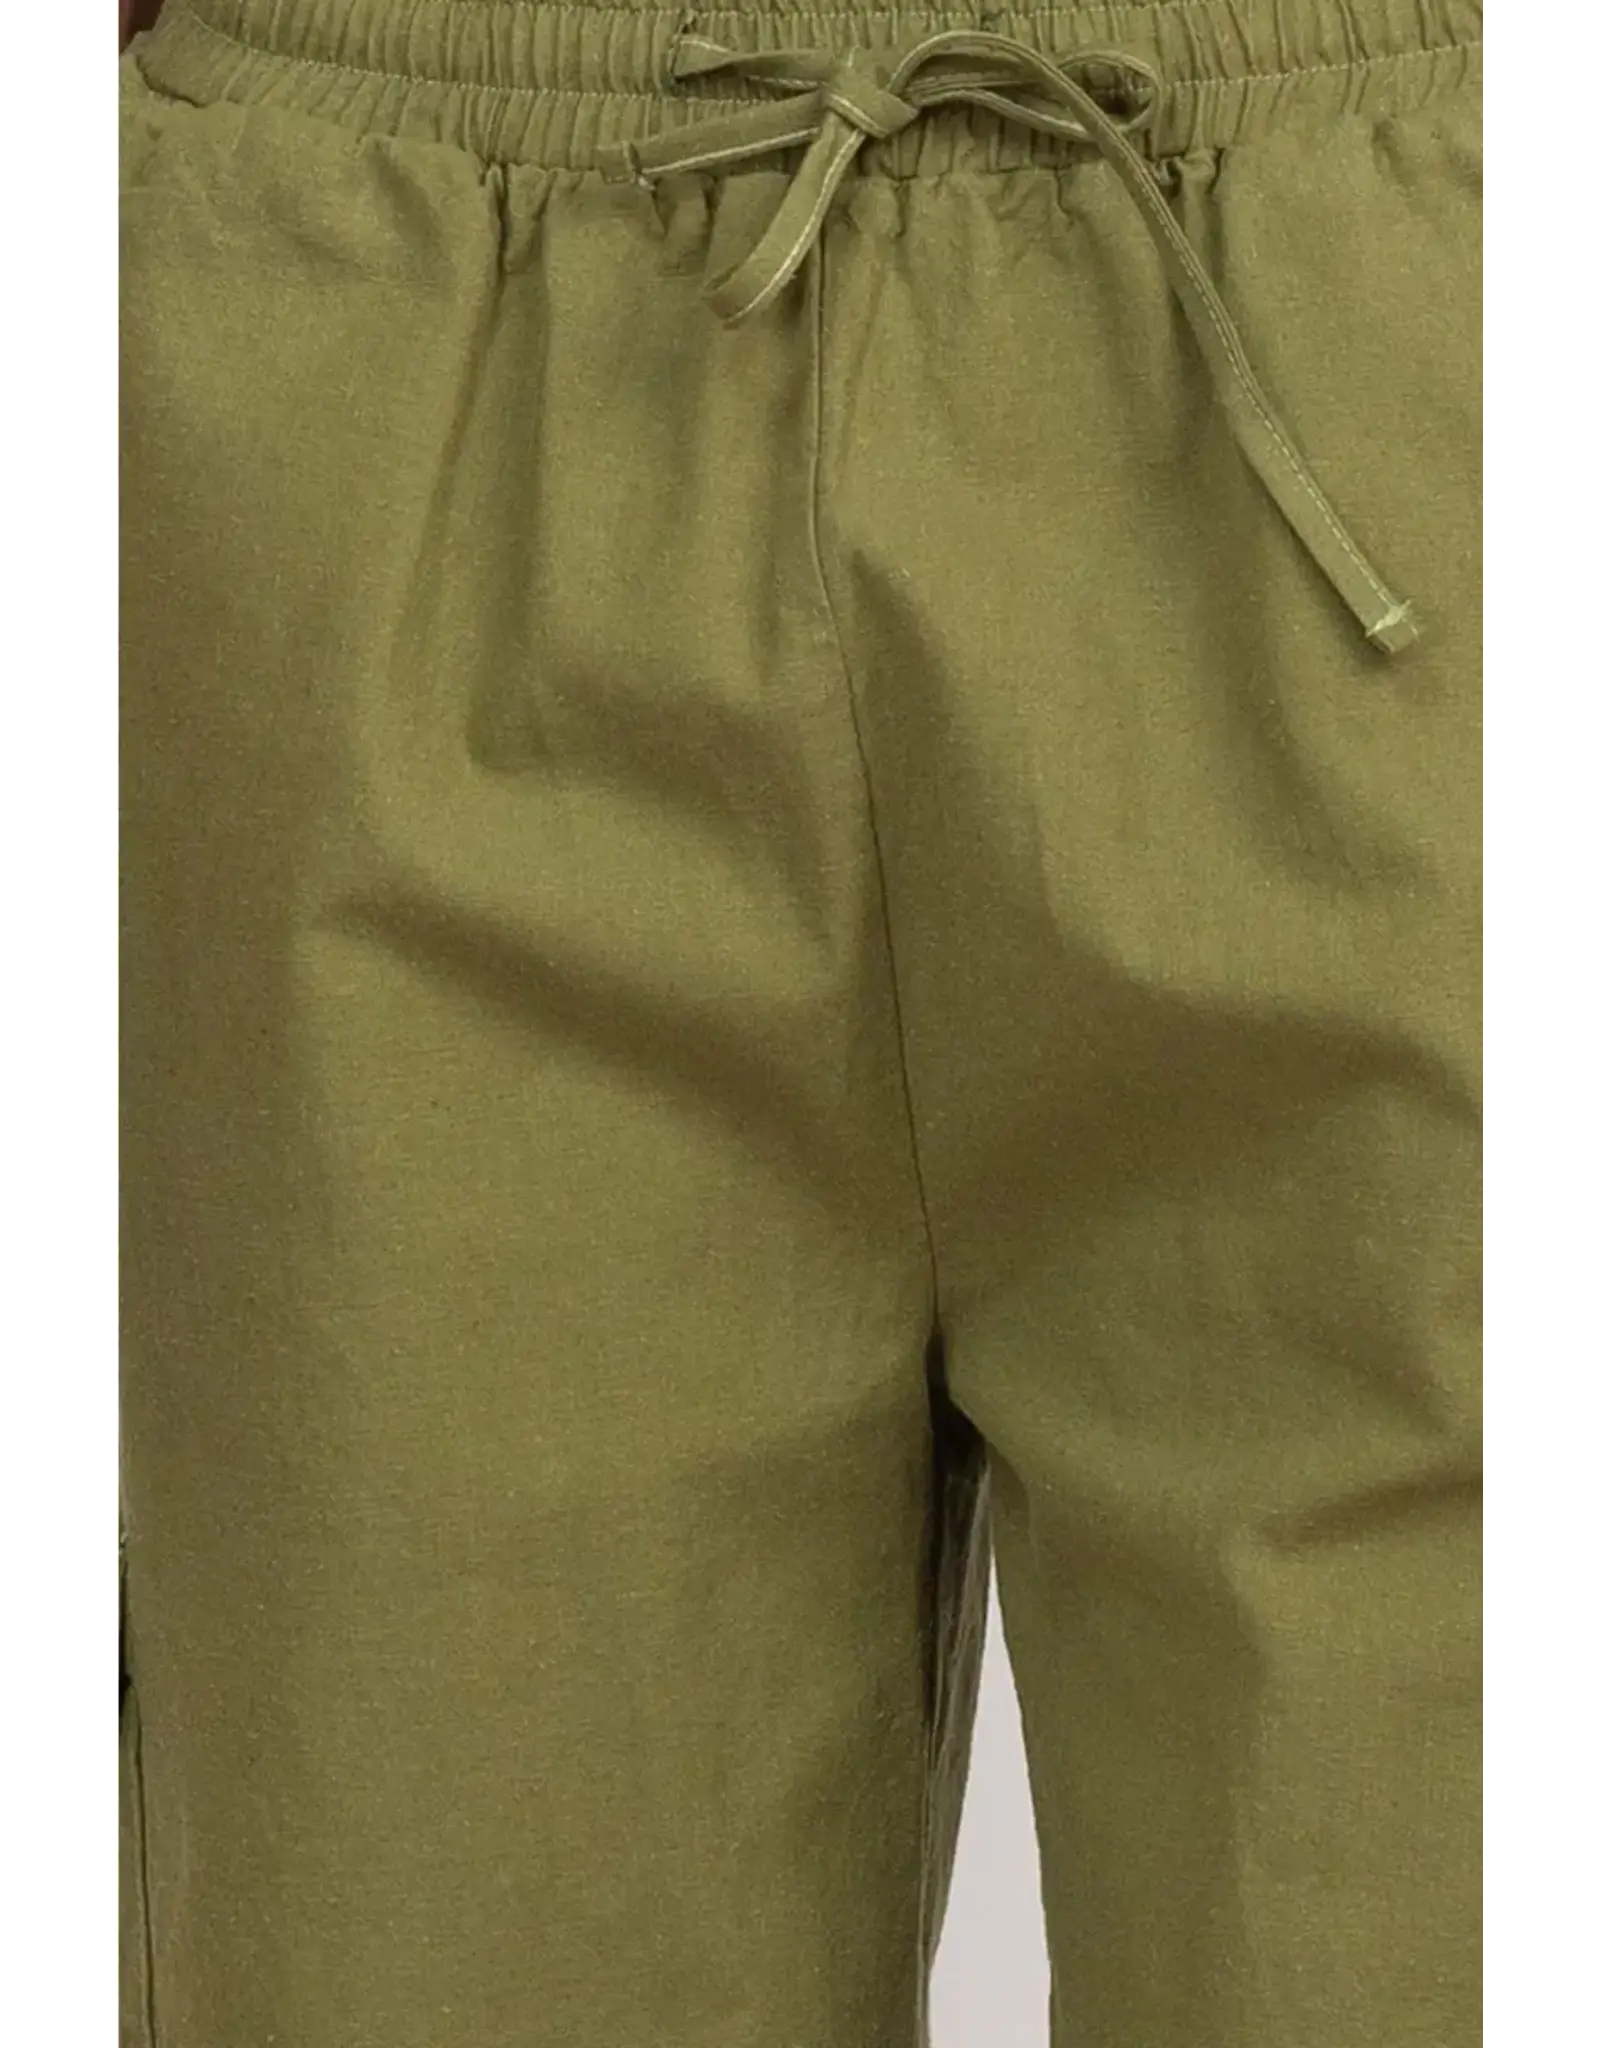 Lakhay's Men's Hemp Cotton Cargo Shorts